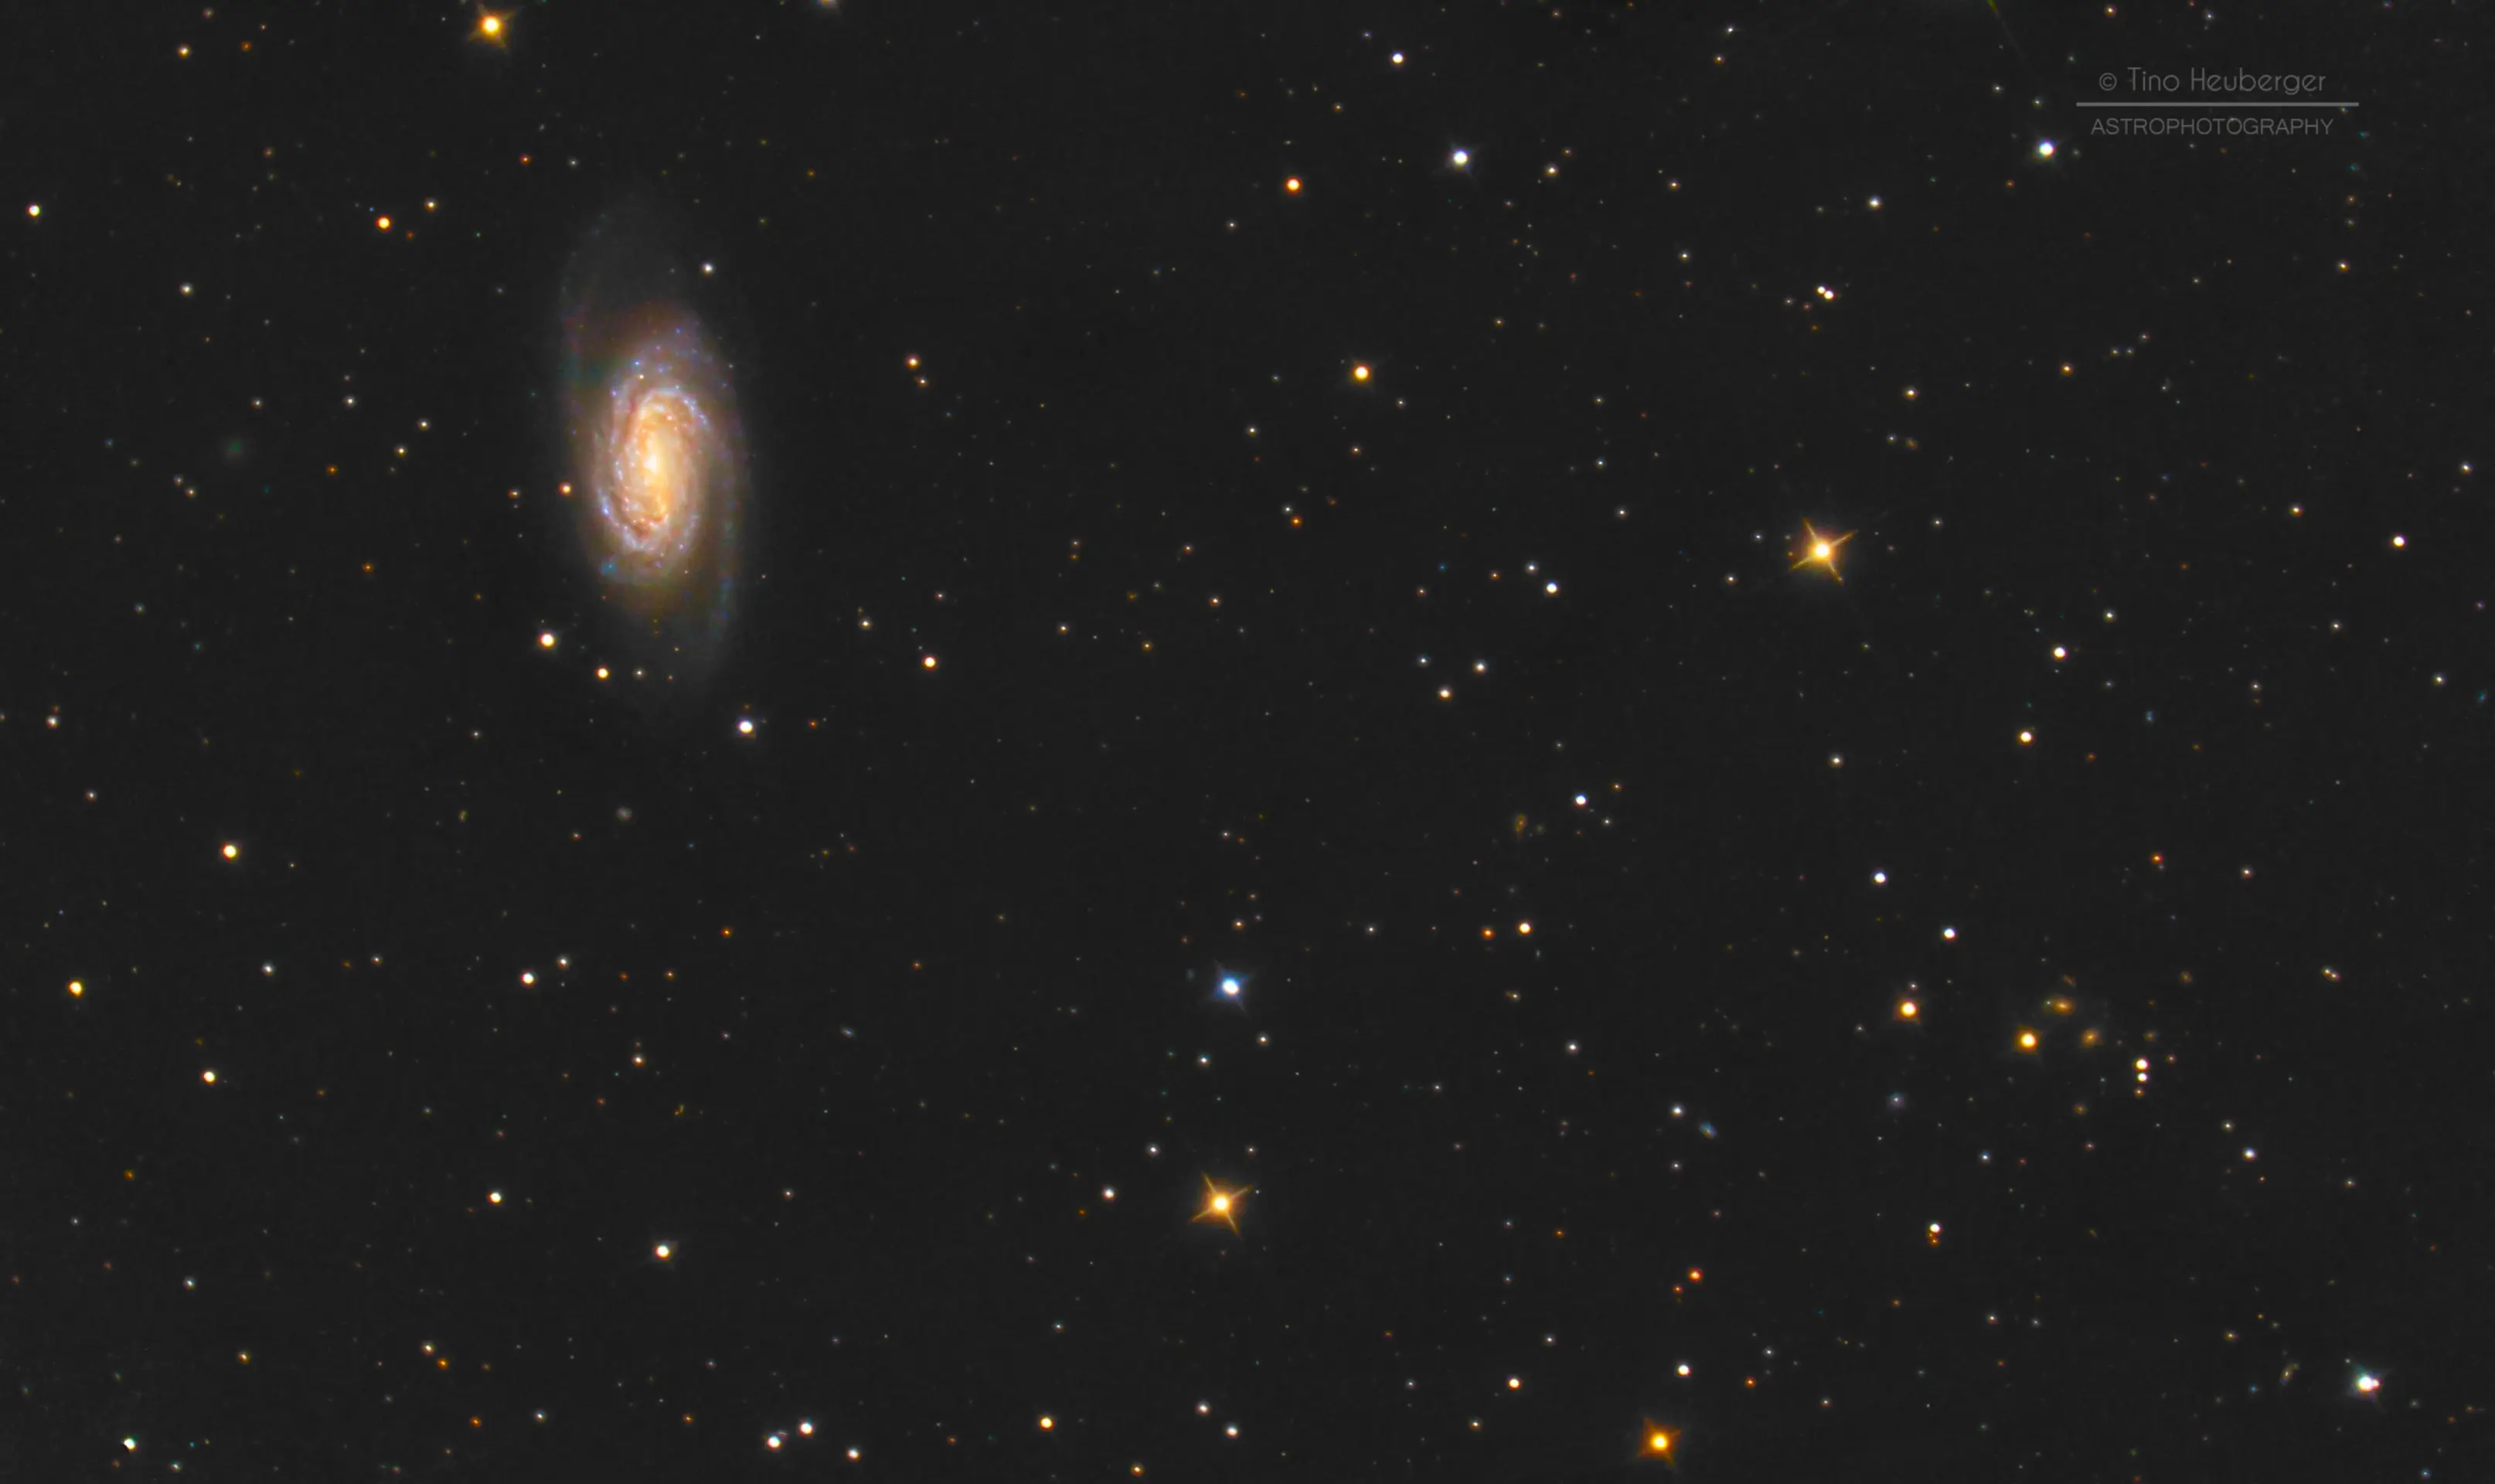 NGC2903: A barred spiral galaxy